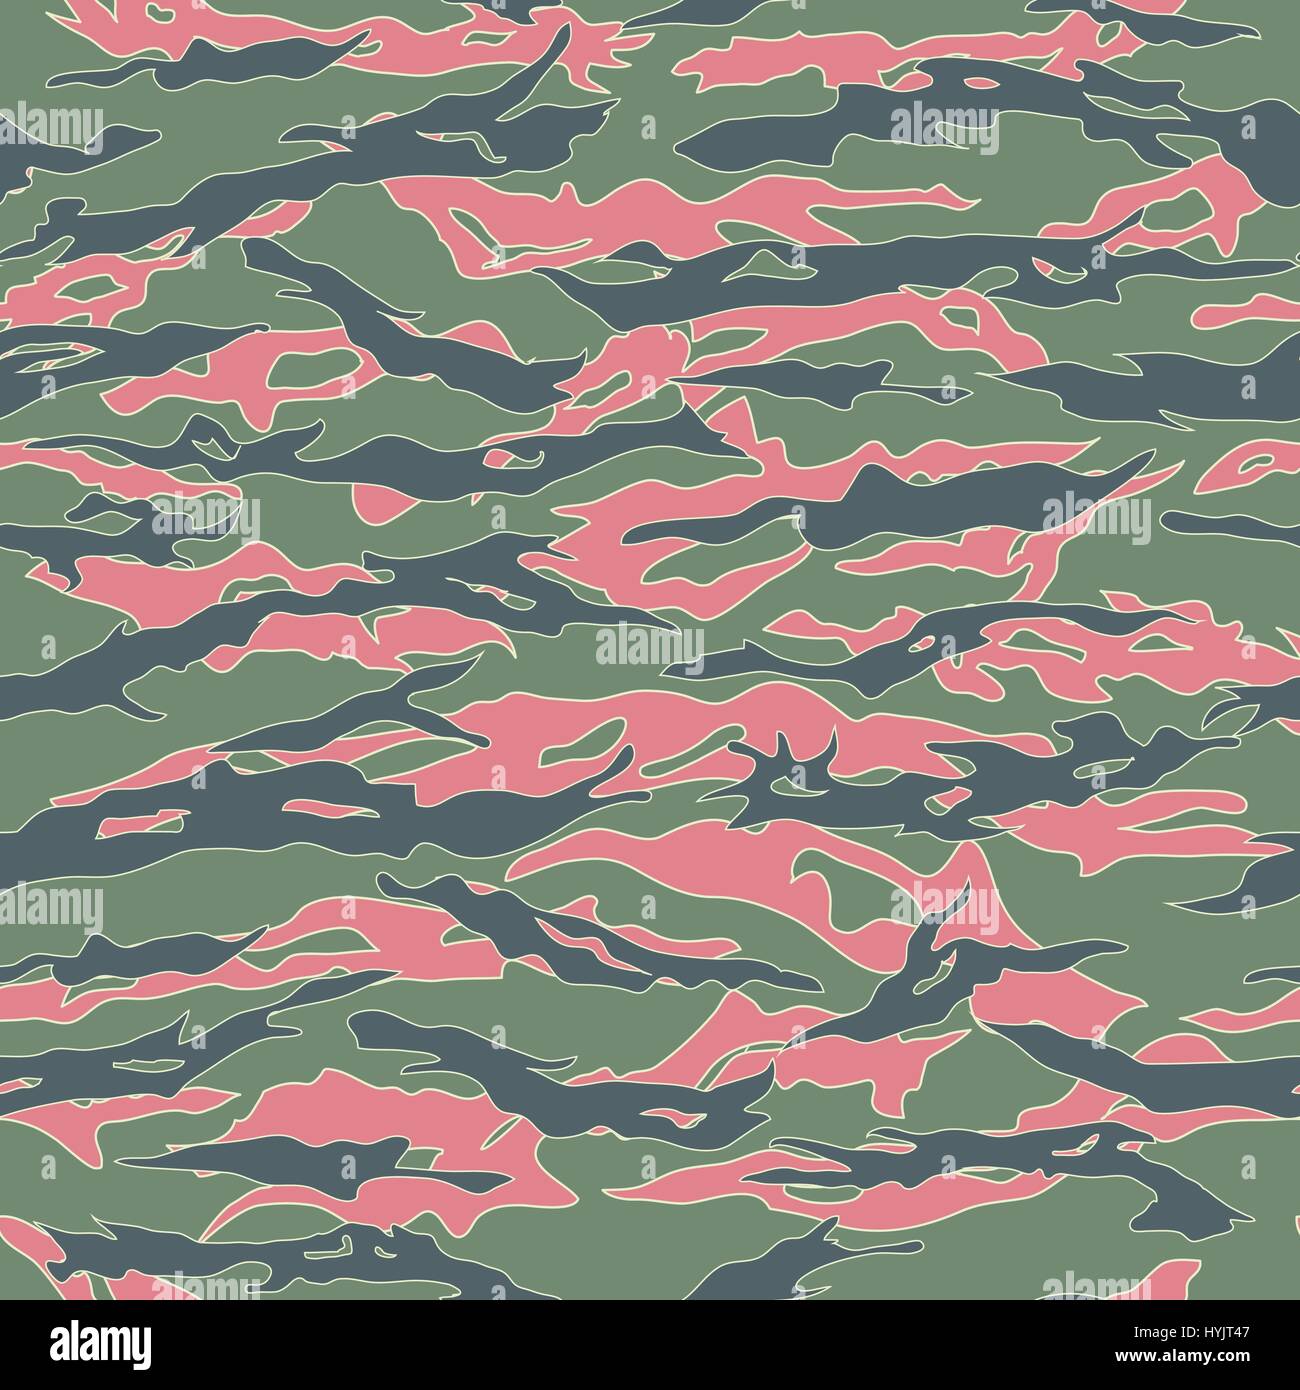 Ecuador Tiger Stripe Camouflage Seamless Patterns Stock Vector Image